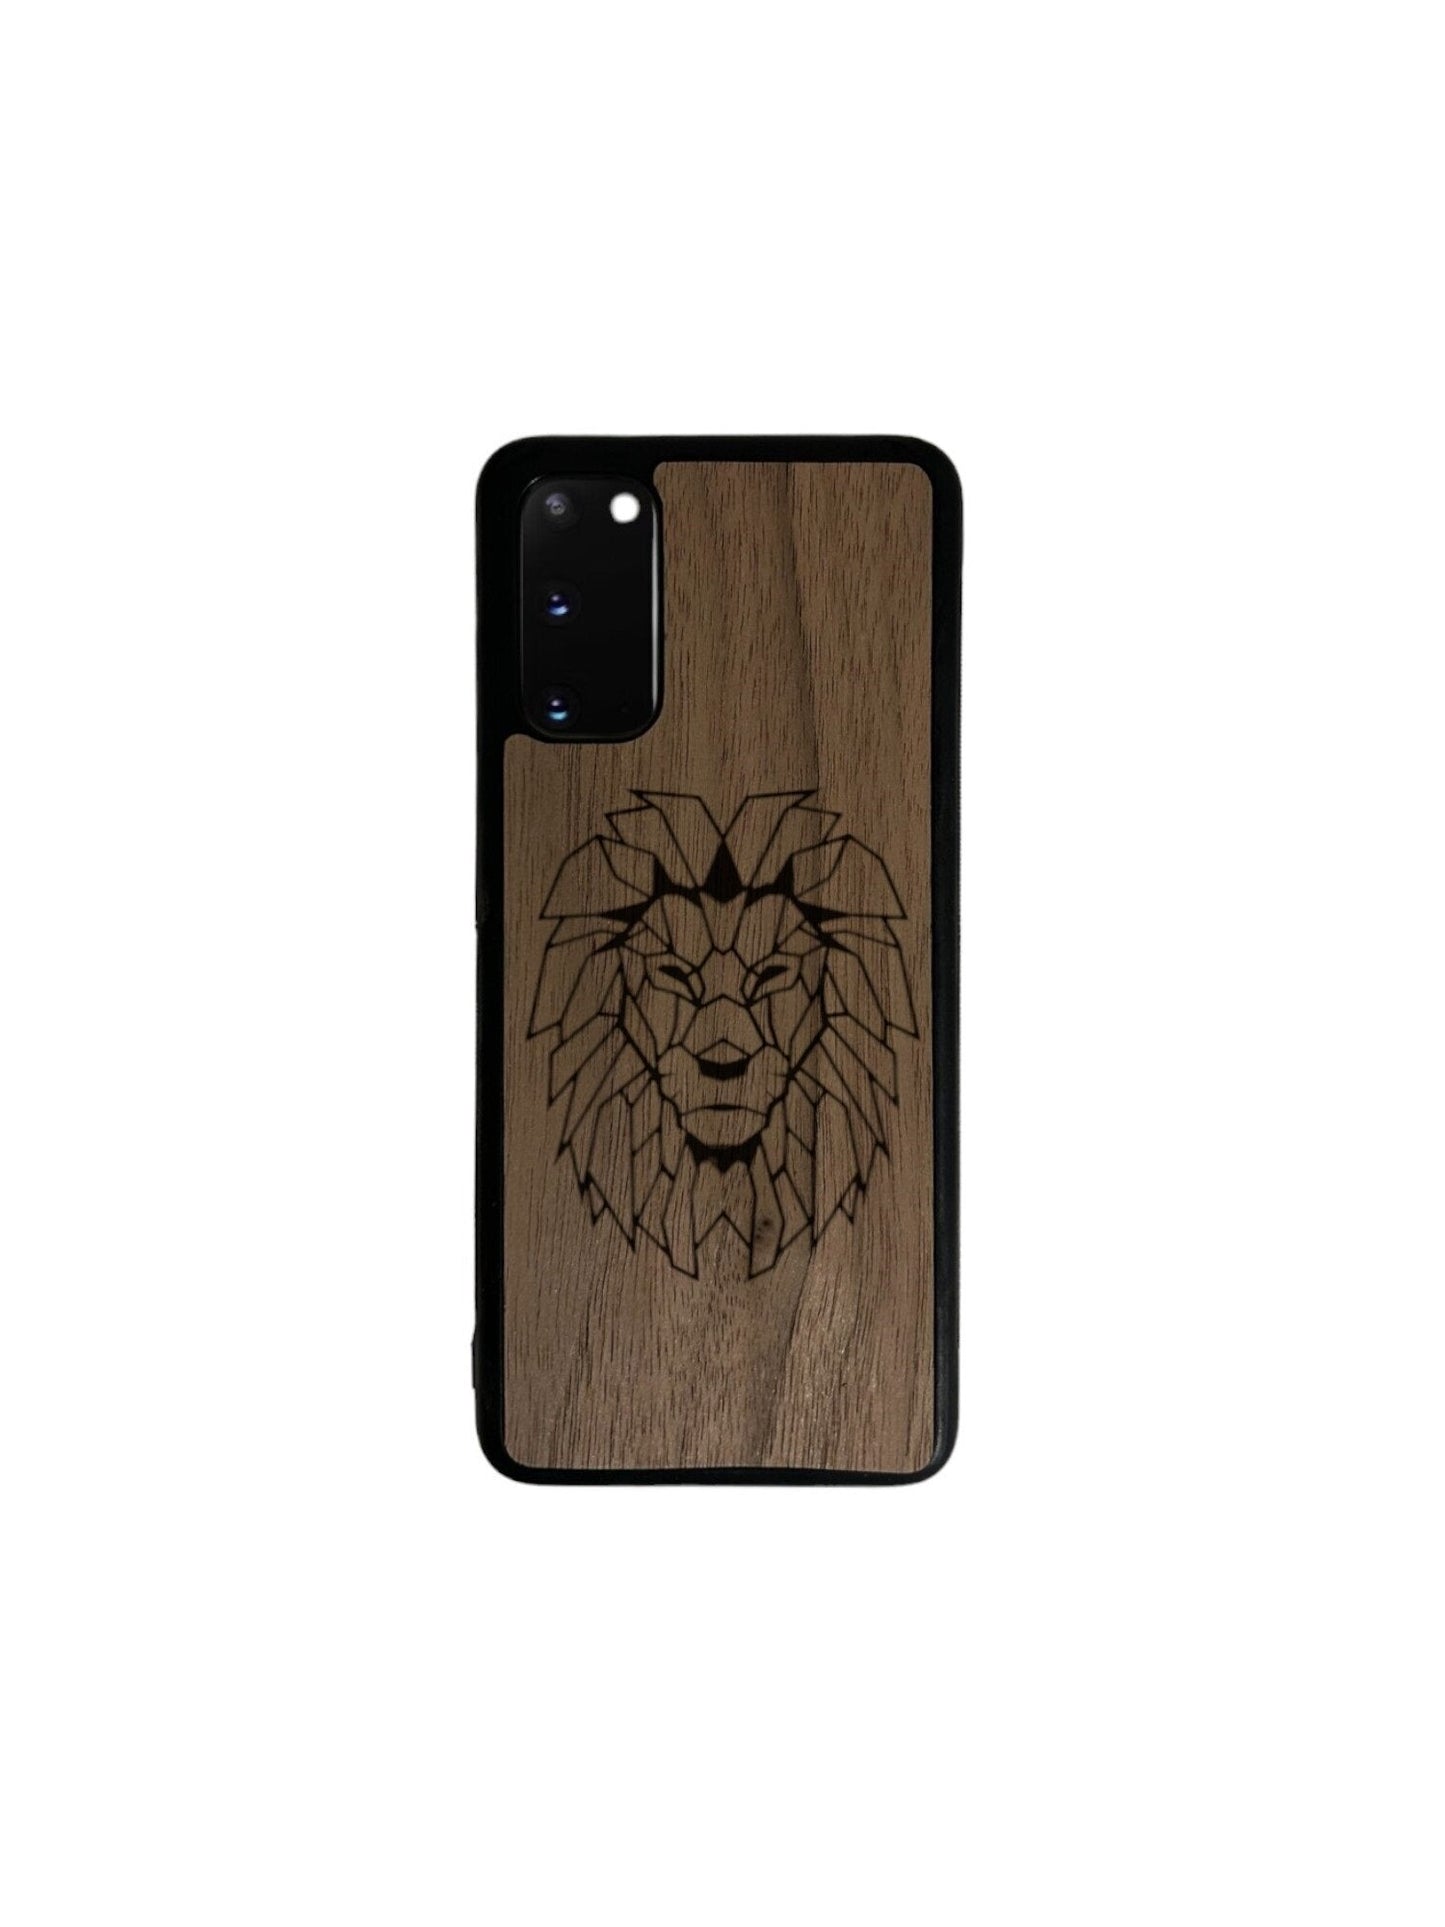 Samsung Galaxy Note case - Lion engraving